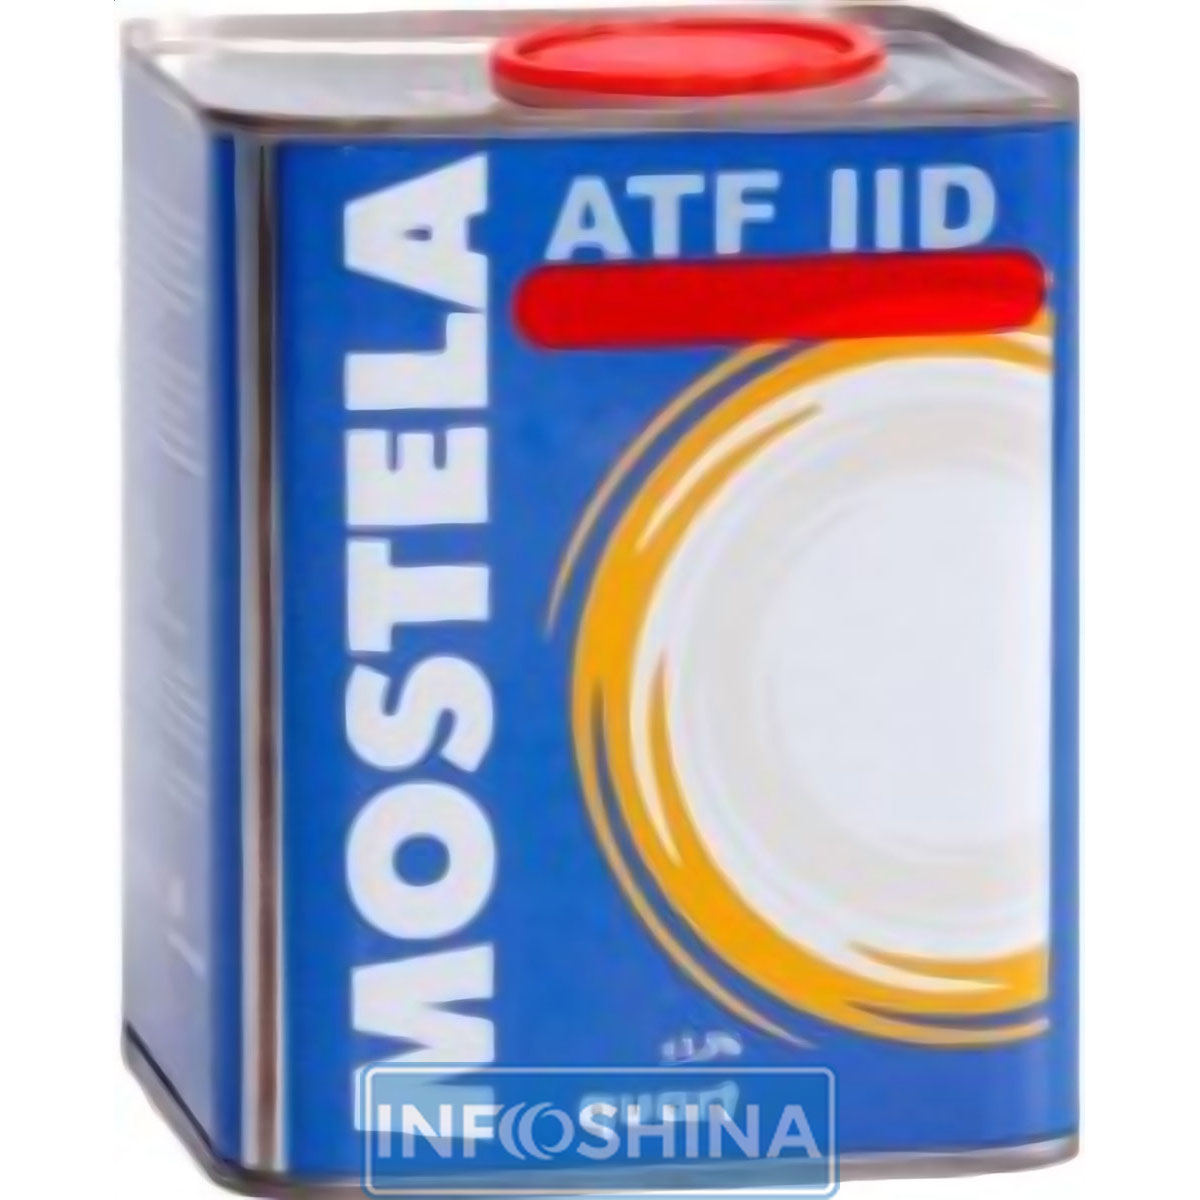 Купити масло Mostela ATF IID (1л)